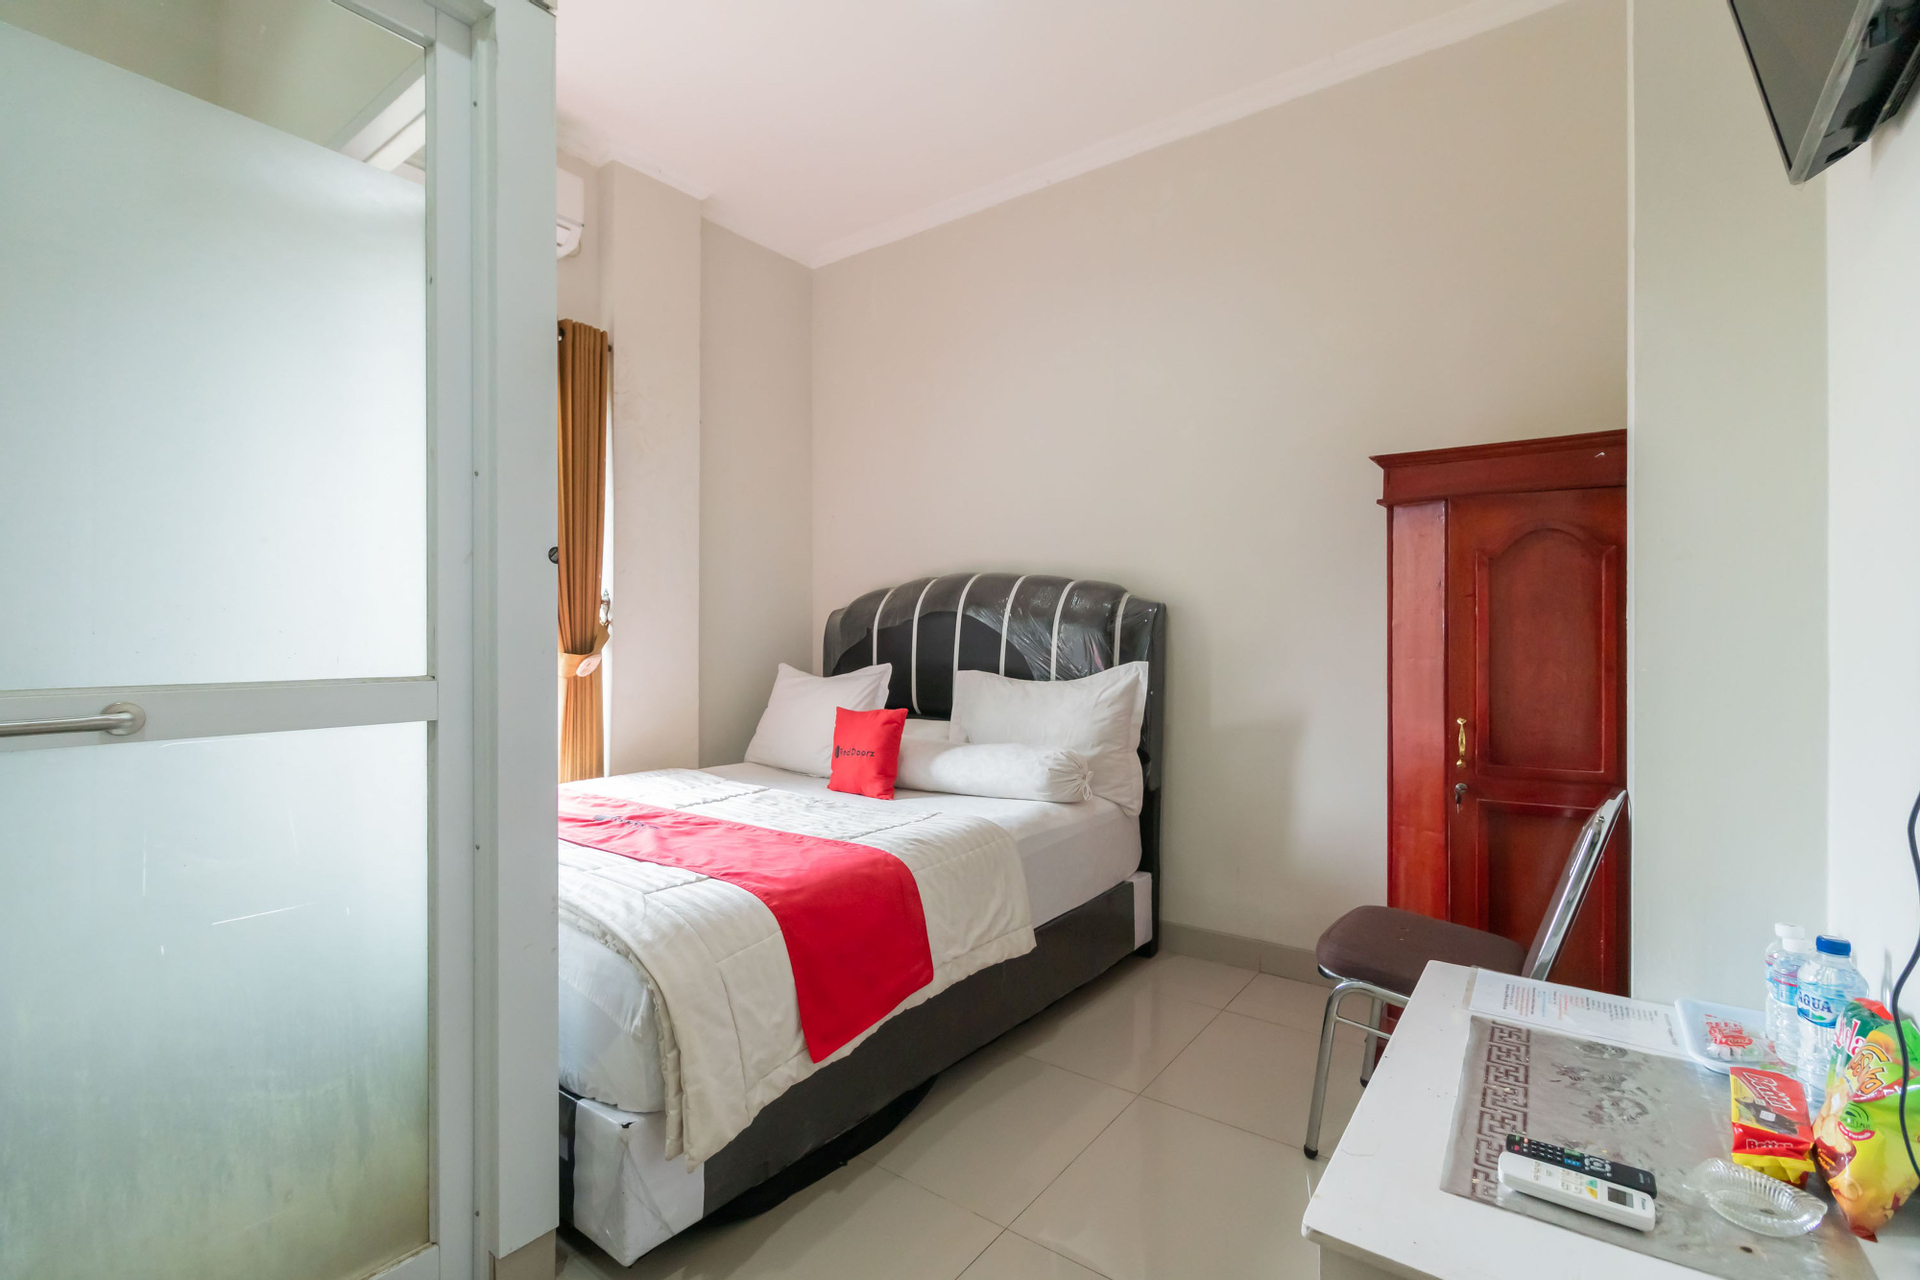 Bedroom 1, Reddoorz Plus near Palembang Airport 3, Palembang